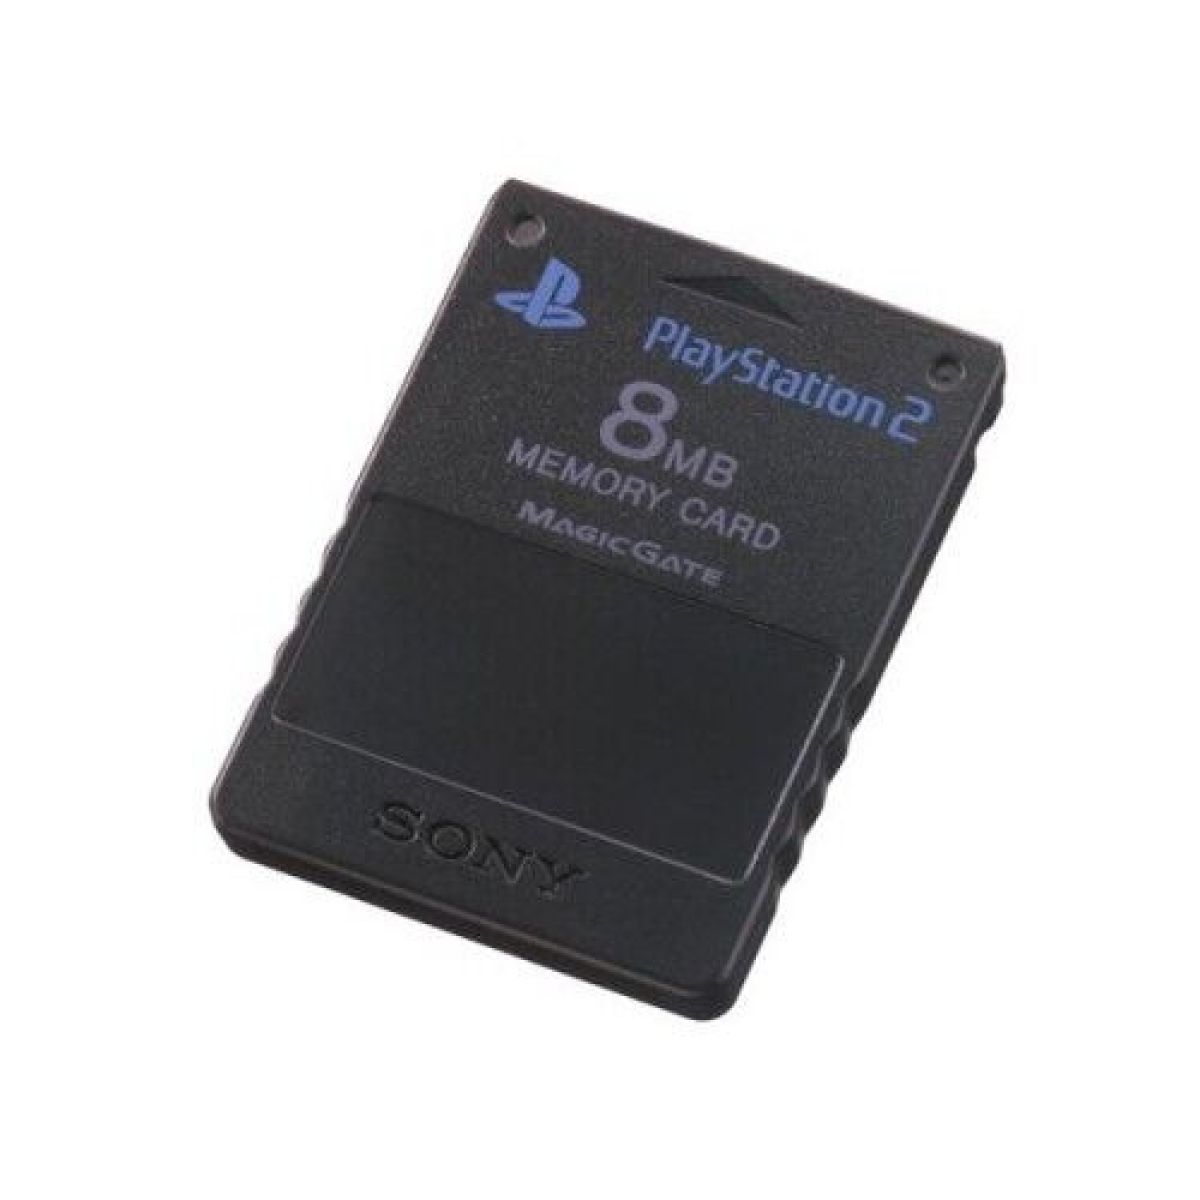 Sony Carte mémoire 8MB